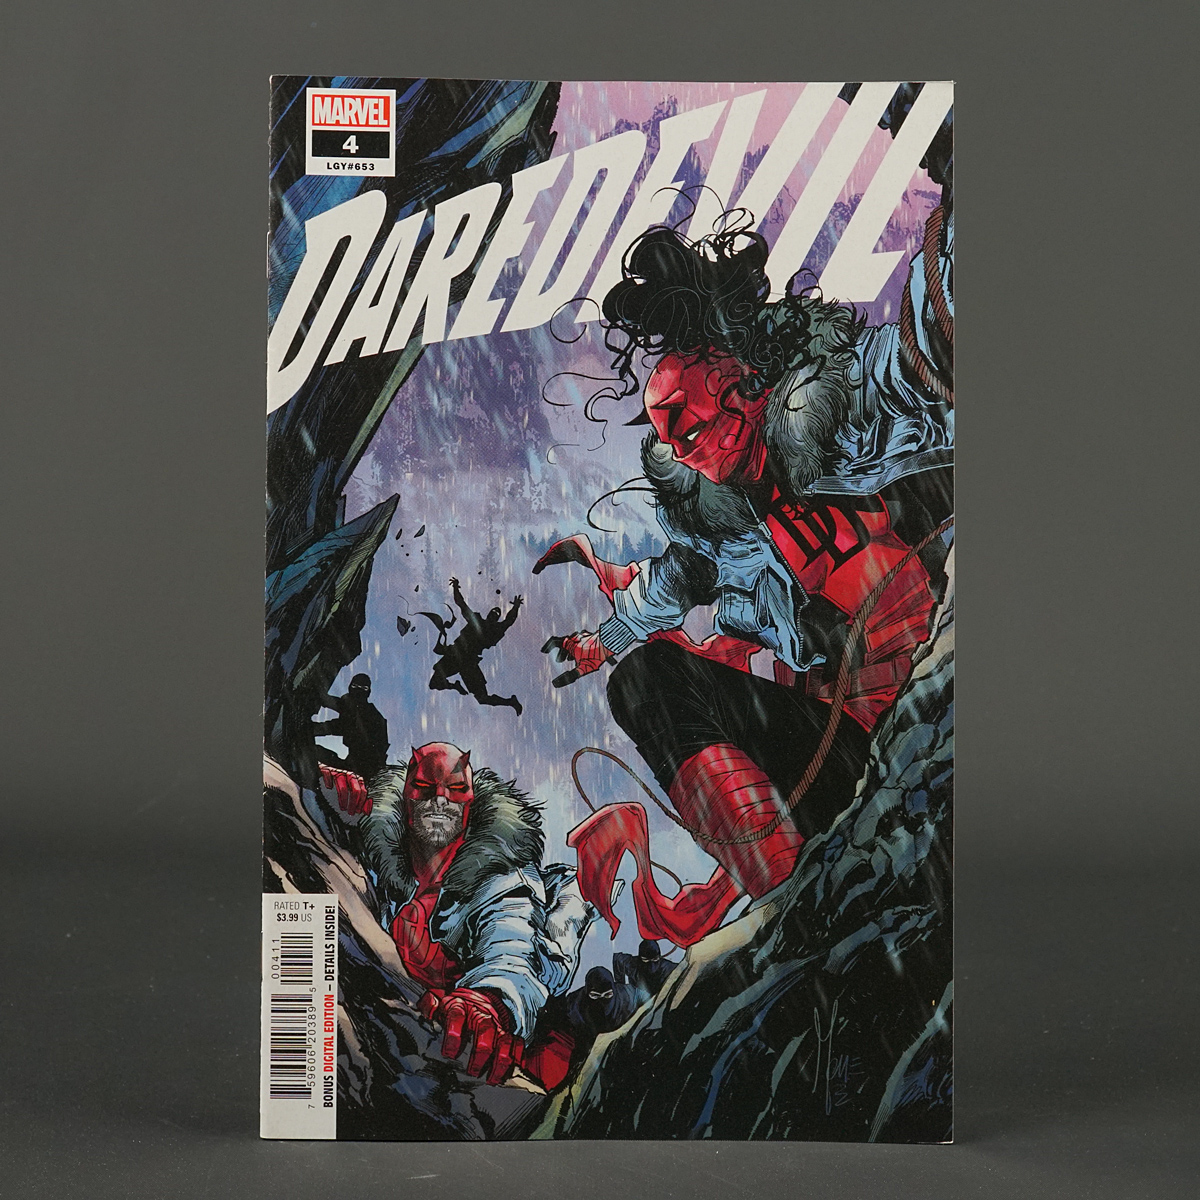 DAREDEVIL #4 Marvel Comics 2022 AUG220878 (W) Zdarsky (CA) Checchetto